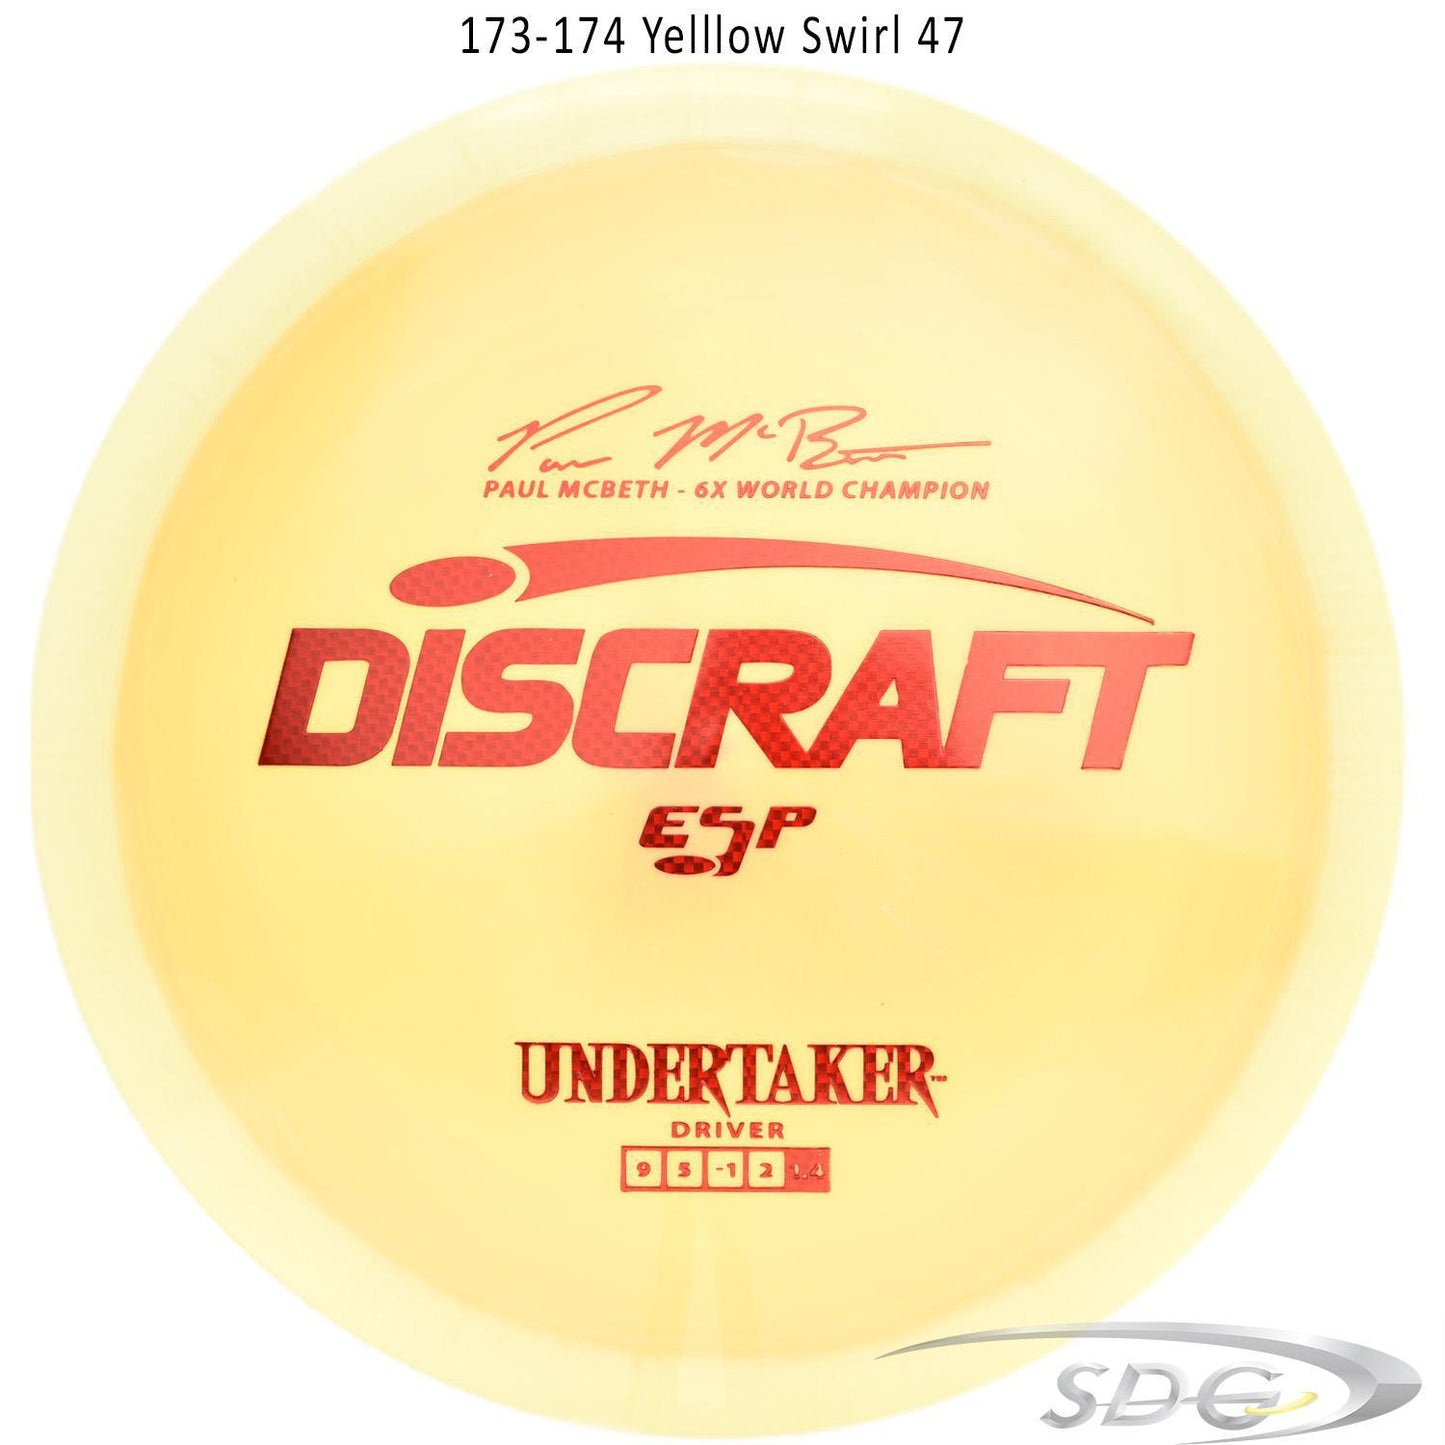 discraft-esp-undertaker-6x-paul-mcbeth-signature-series-disc-golf-distance-driver-1 173-174 Yellow 47 